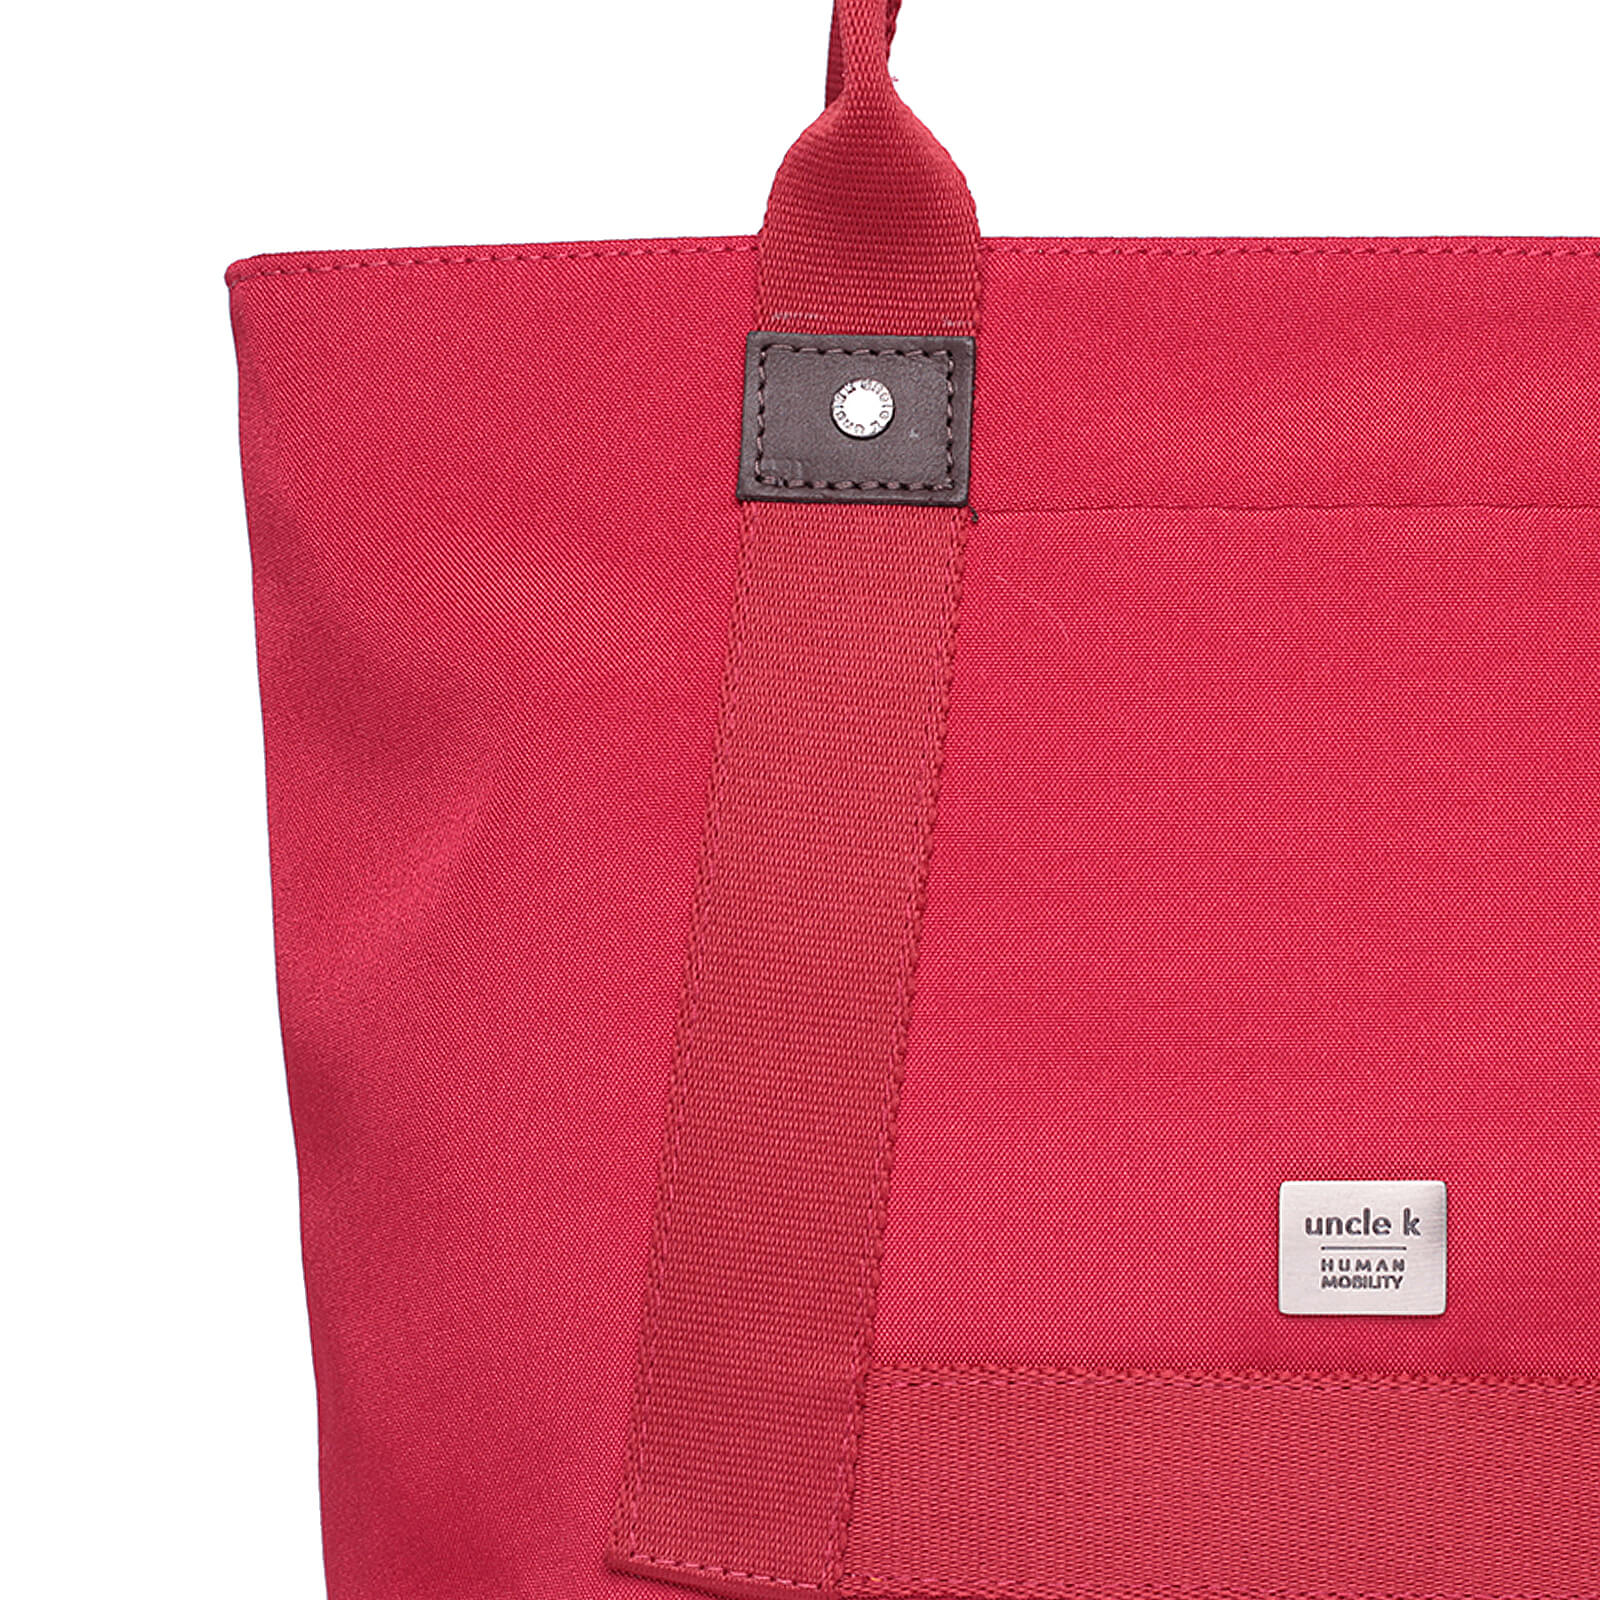 bolsa-shopping-bag-nylon-61092-v24-unclek-vermelho-4